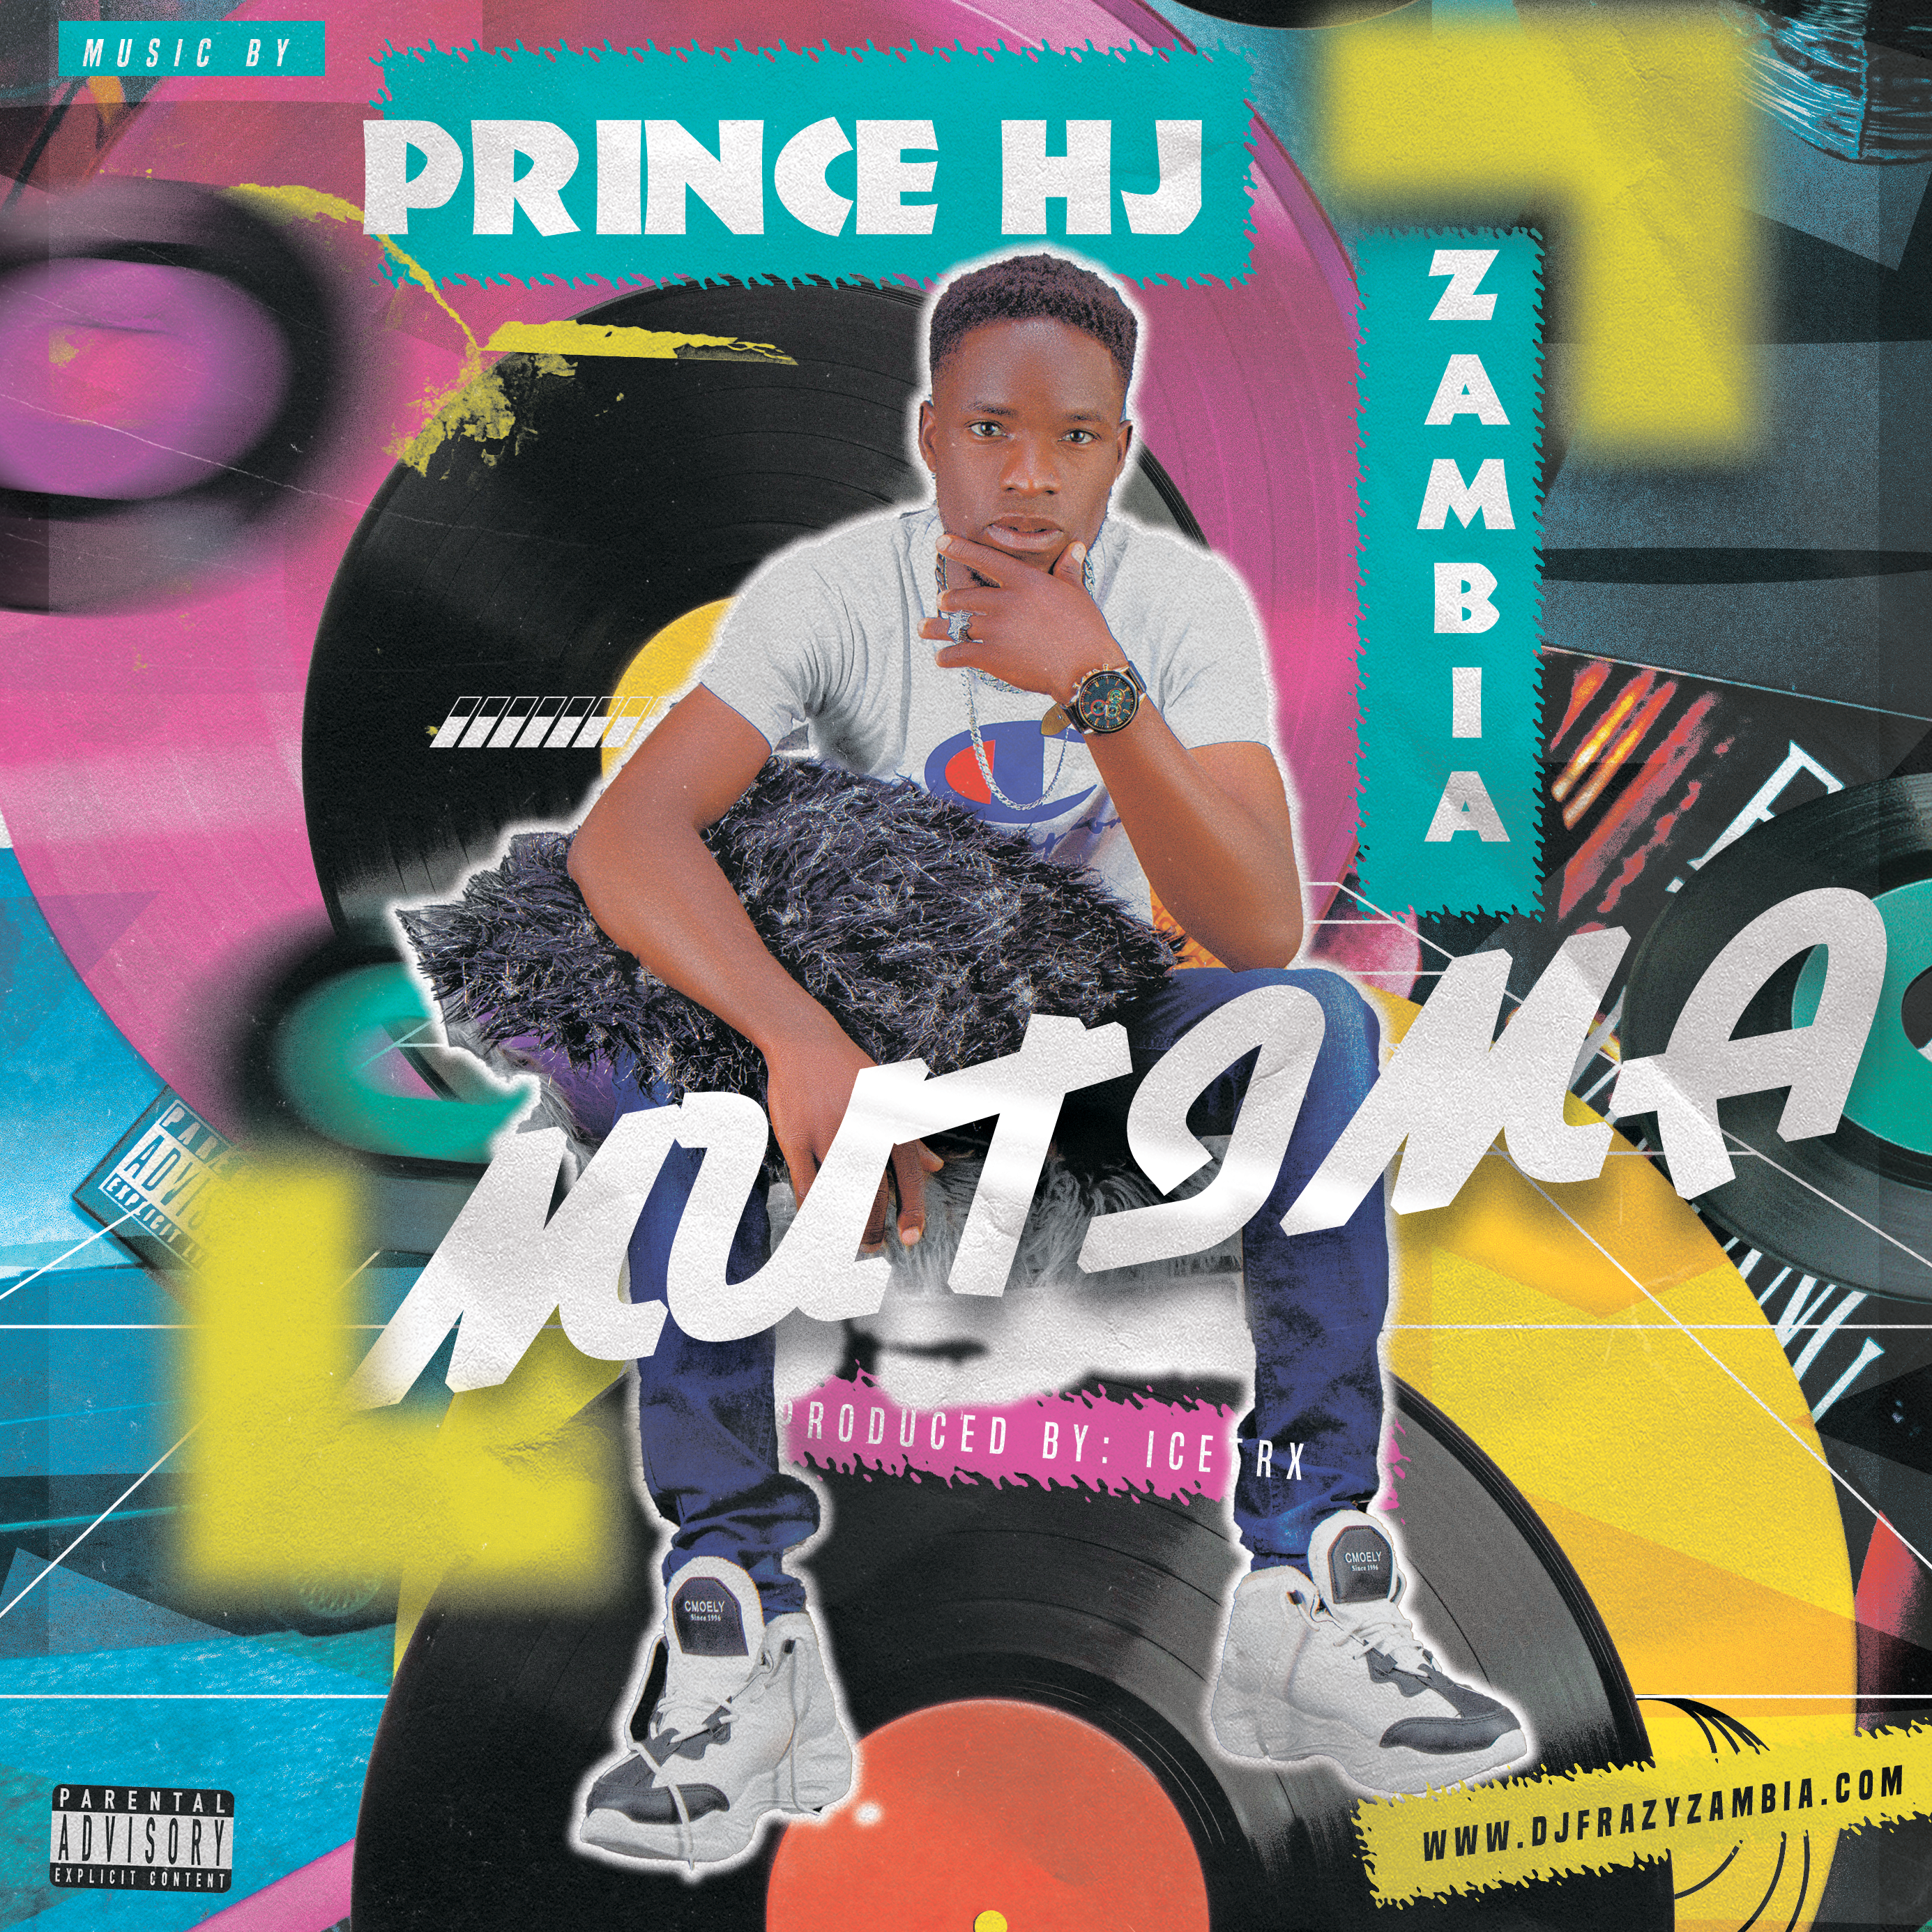 Prince HJ - Mutima (Pro Icetrx) Djfrazyzambia.com